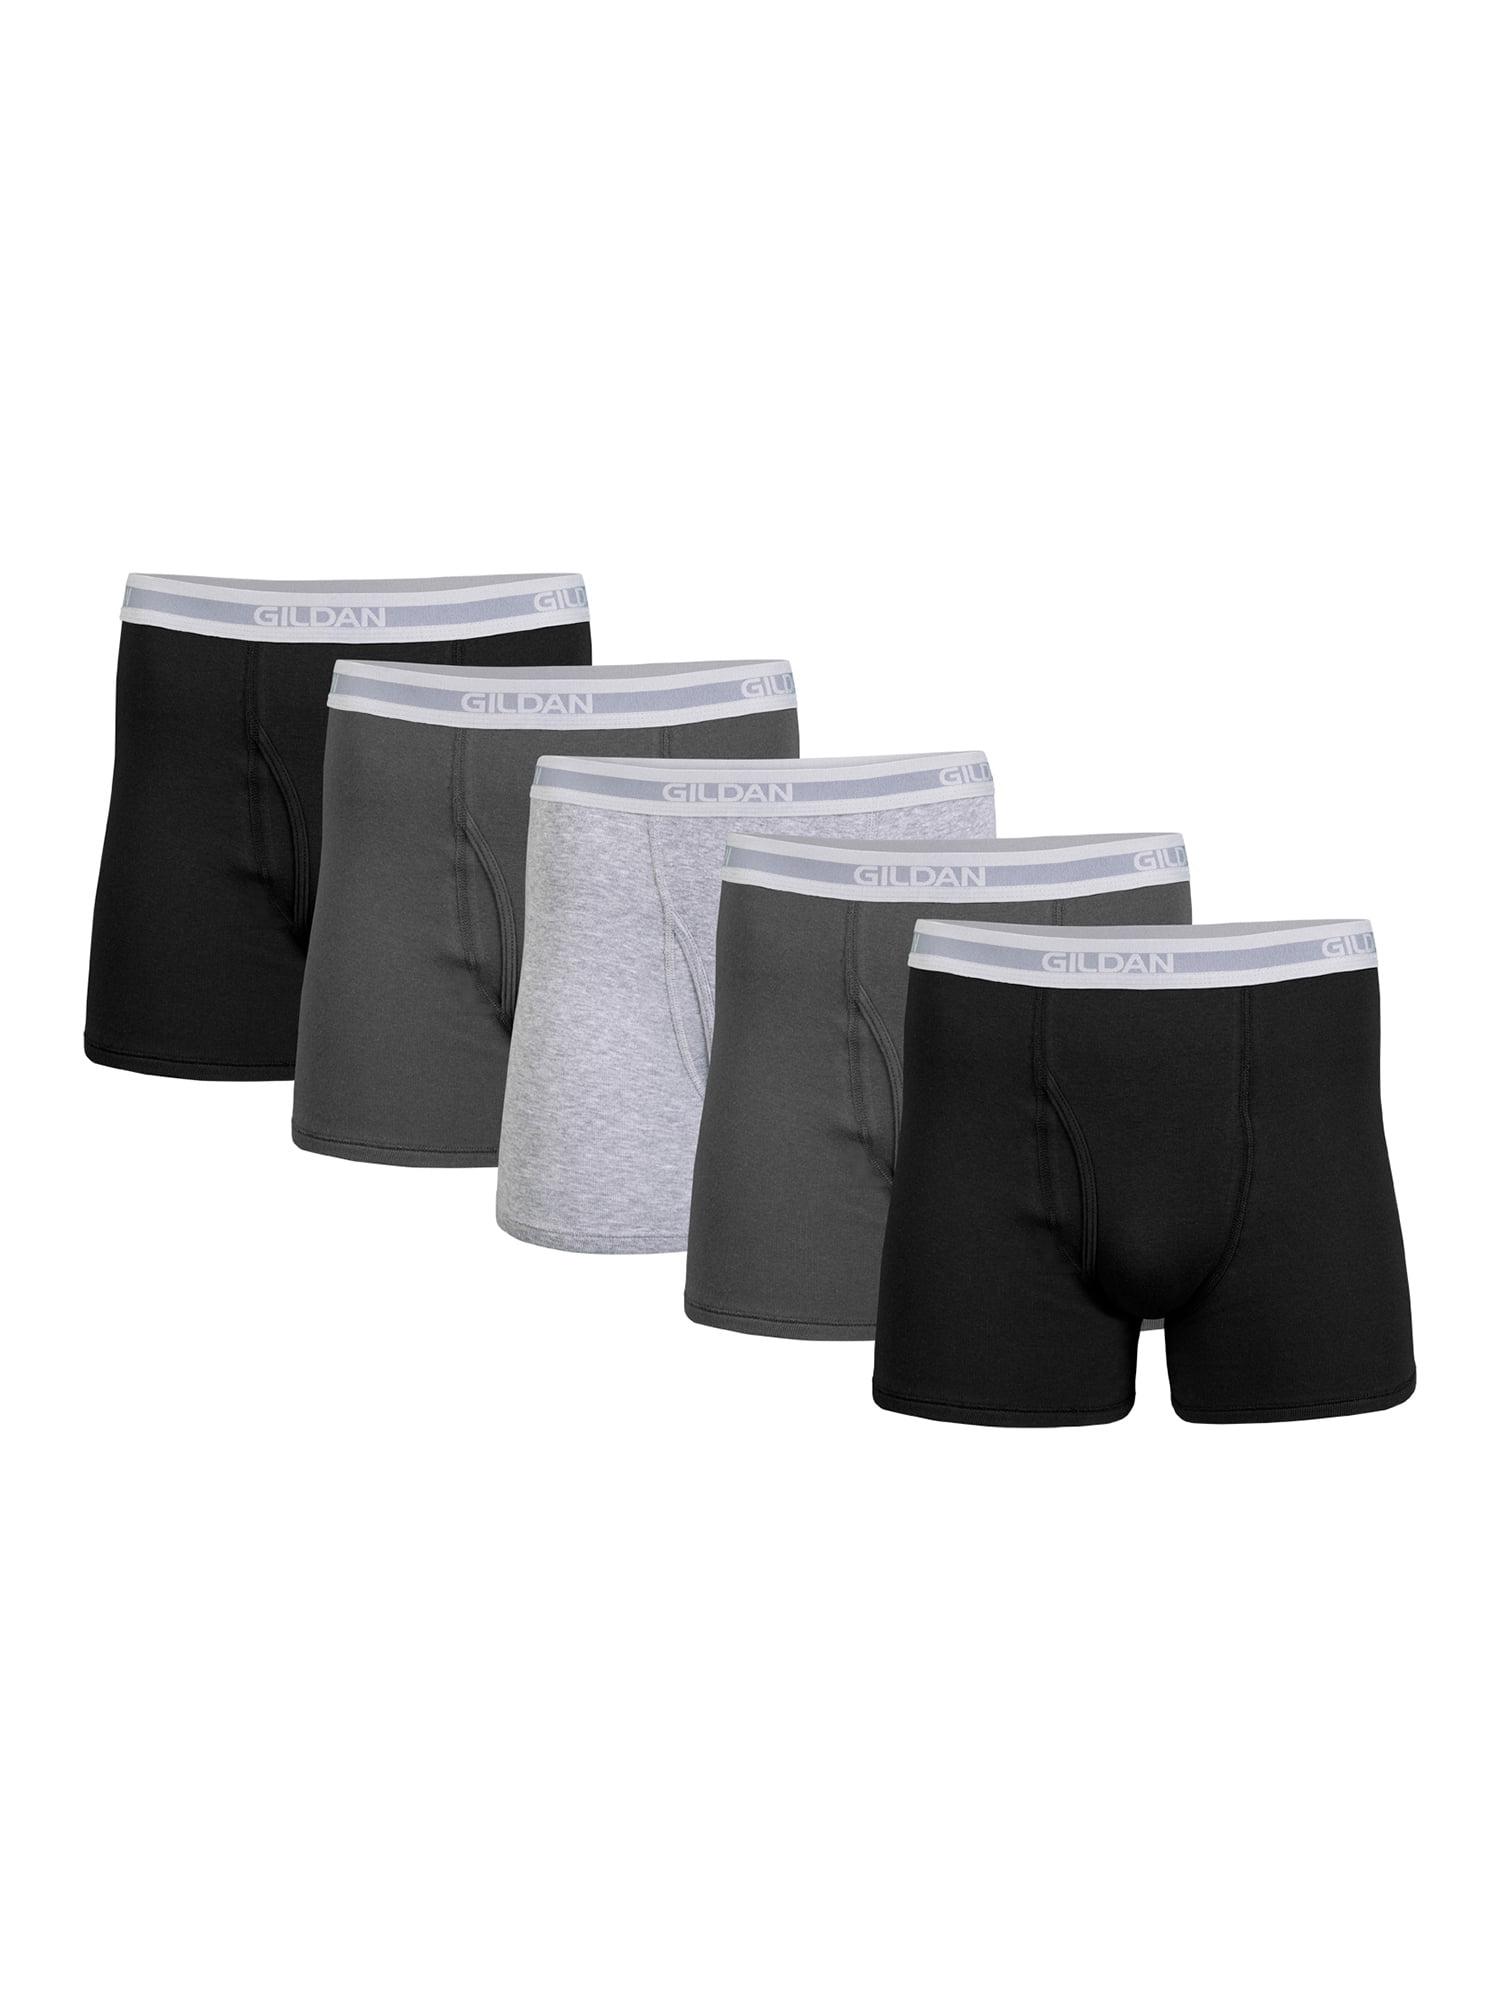 Gildan Men's Regular Leg Boxer Brief 5 Pack, Small, Mixed https